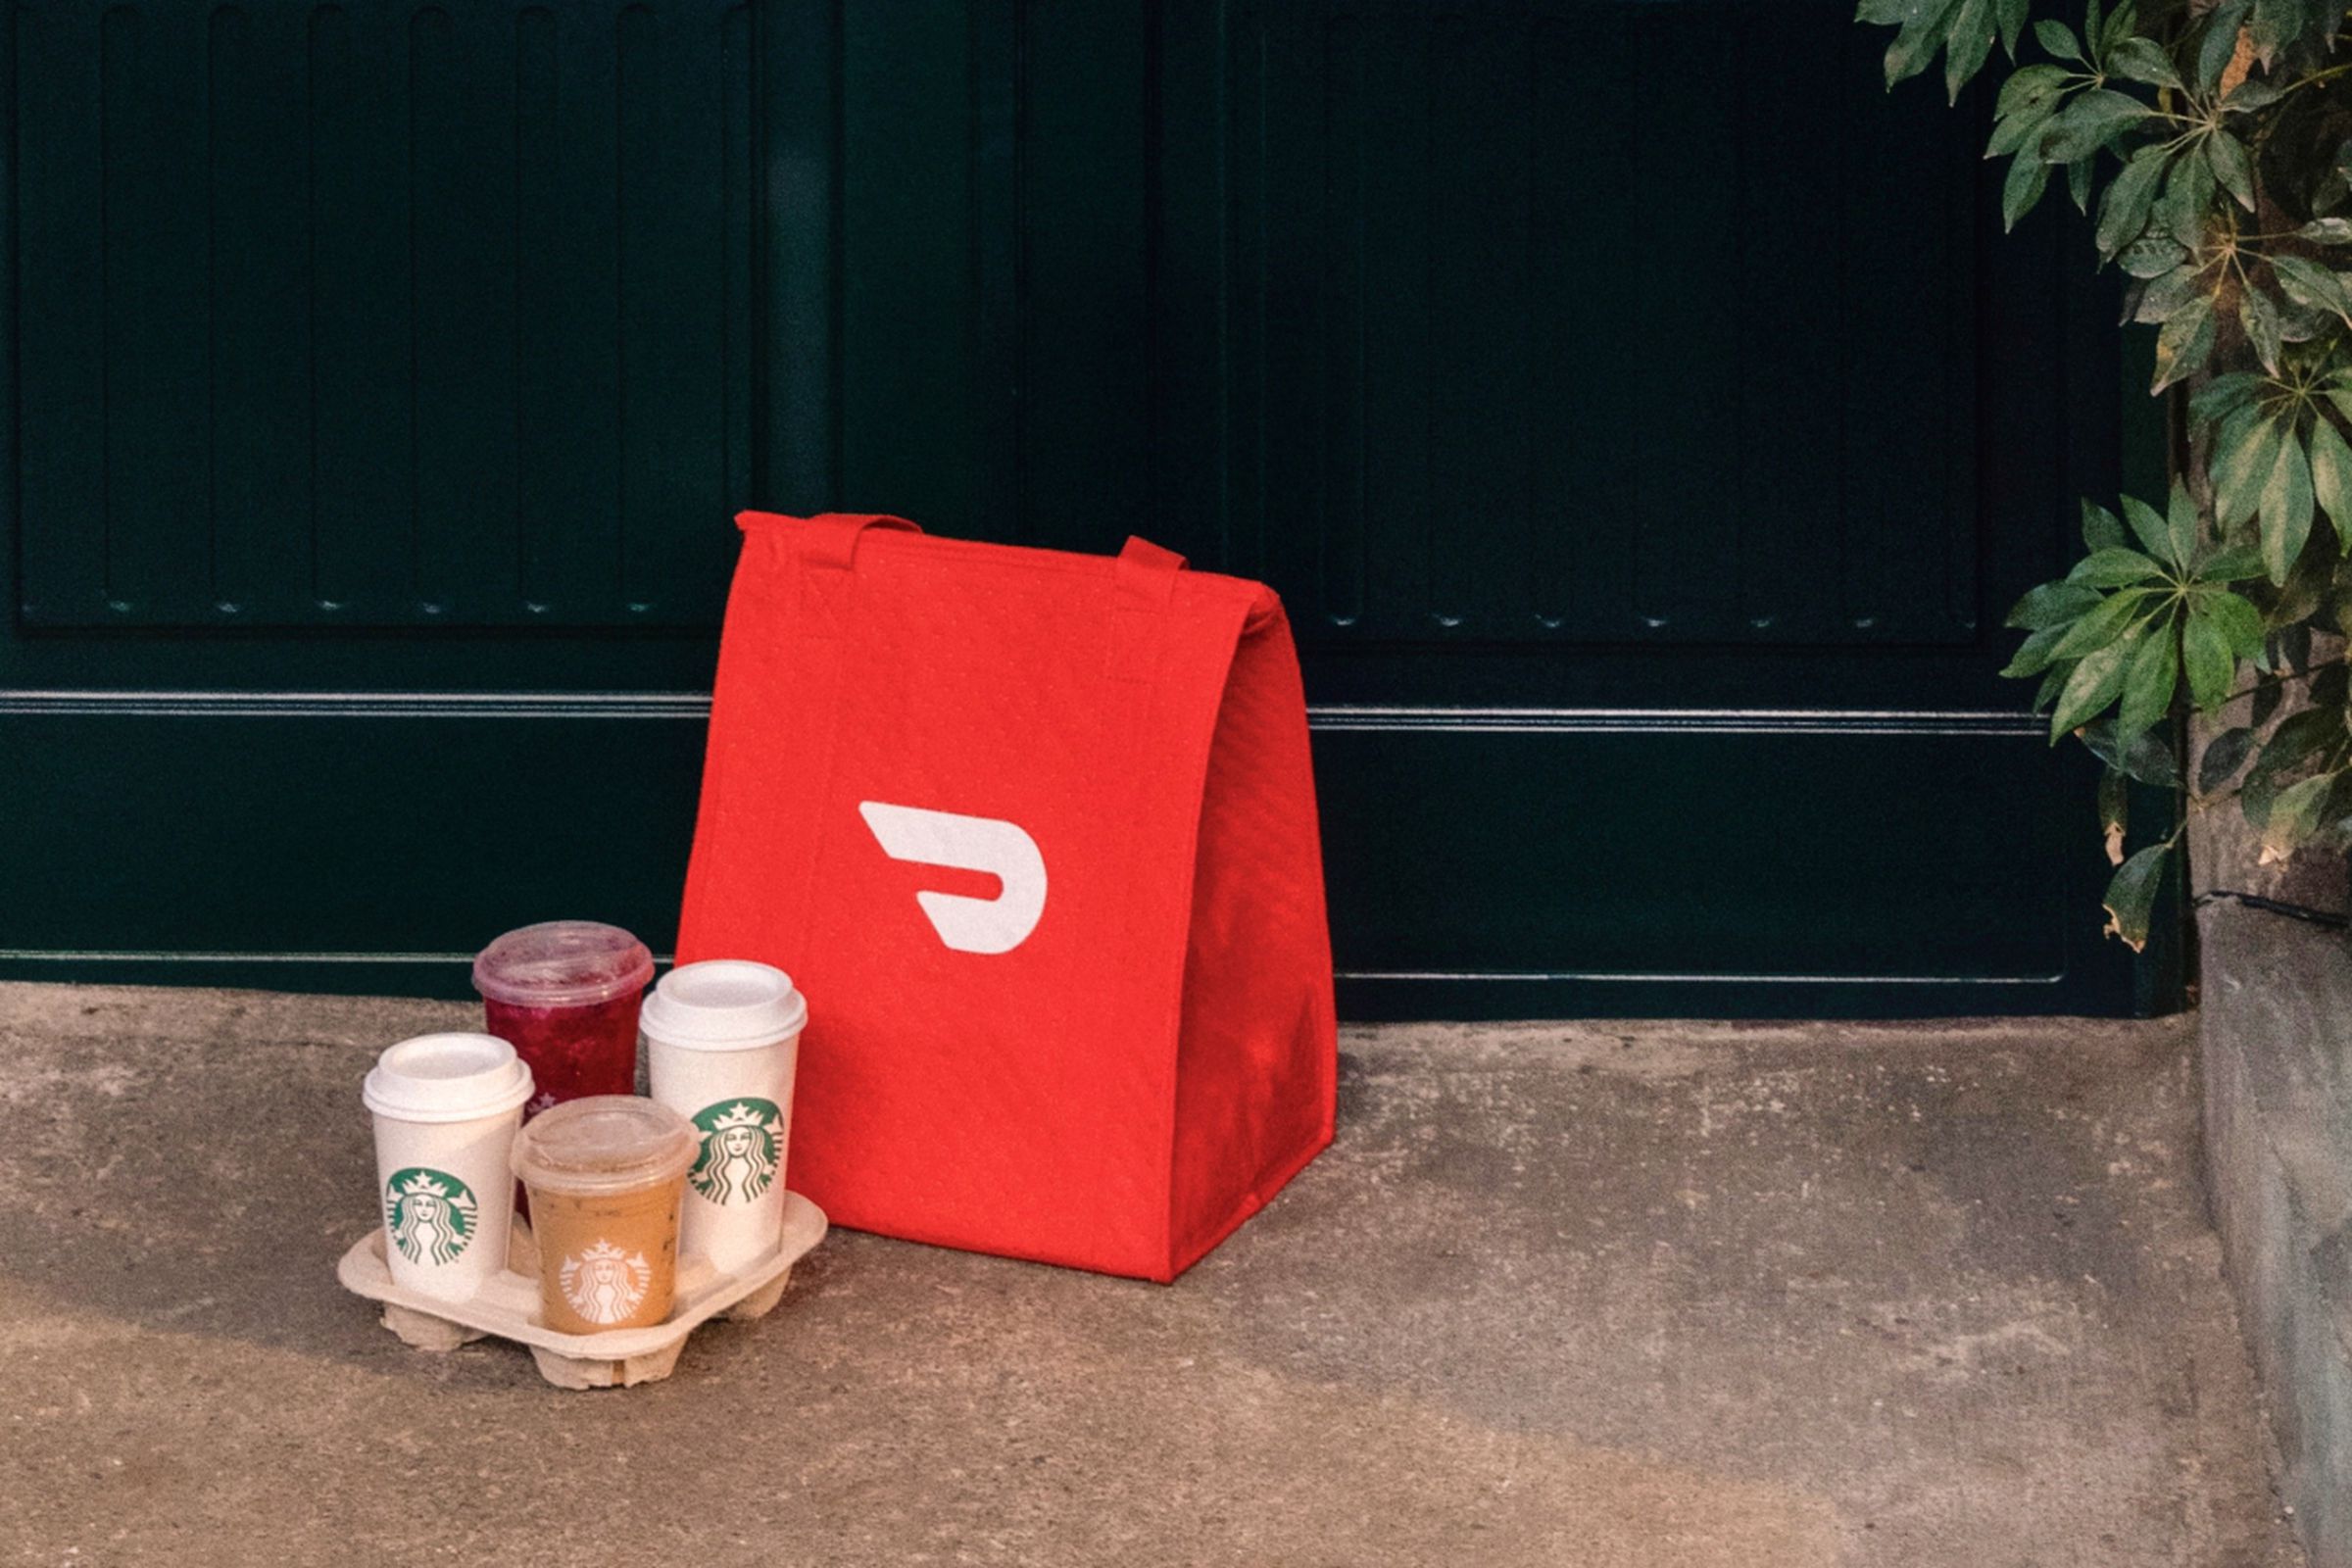 Now DoorDash will deliver Starbucks across the US, too